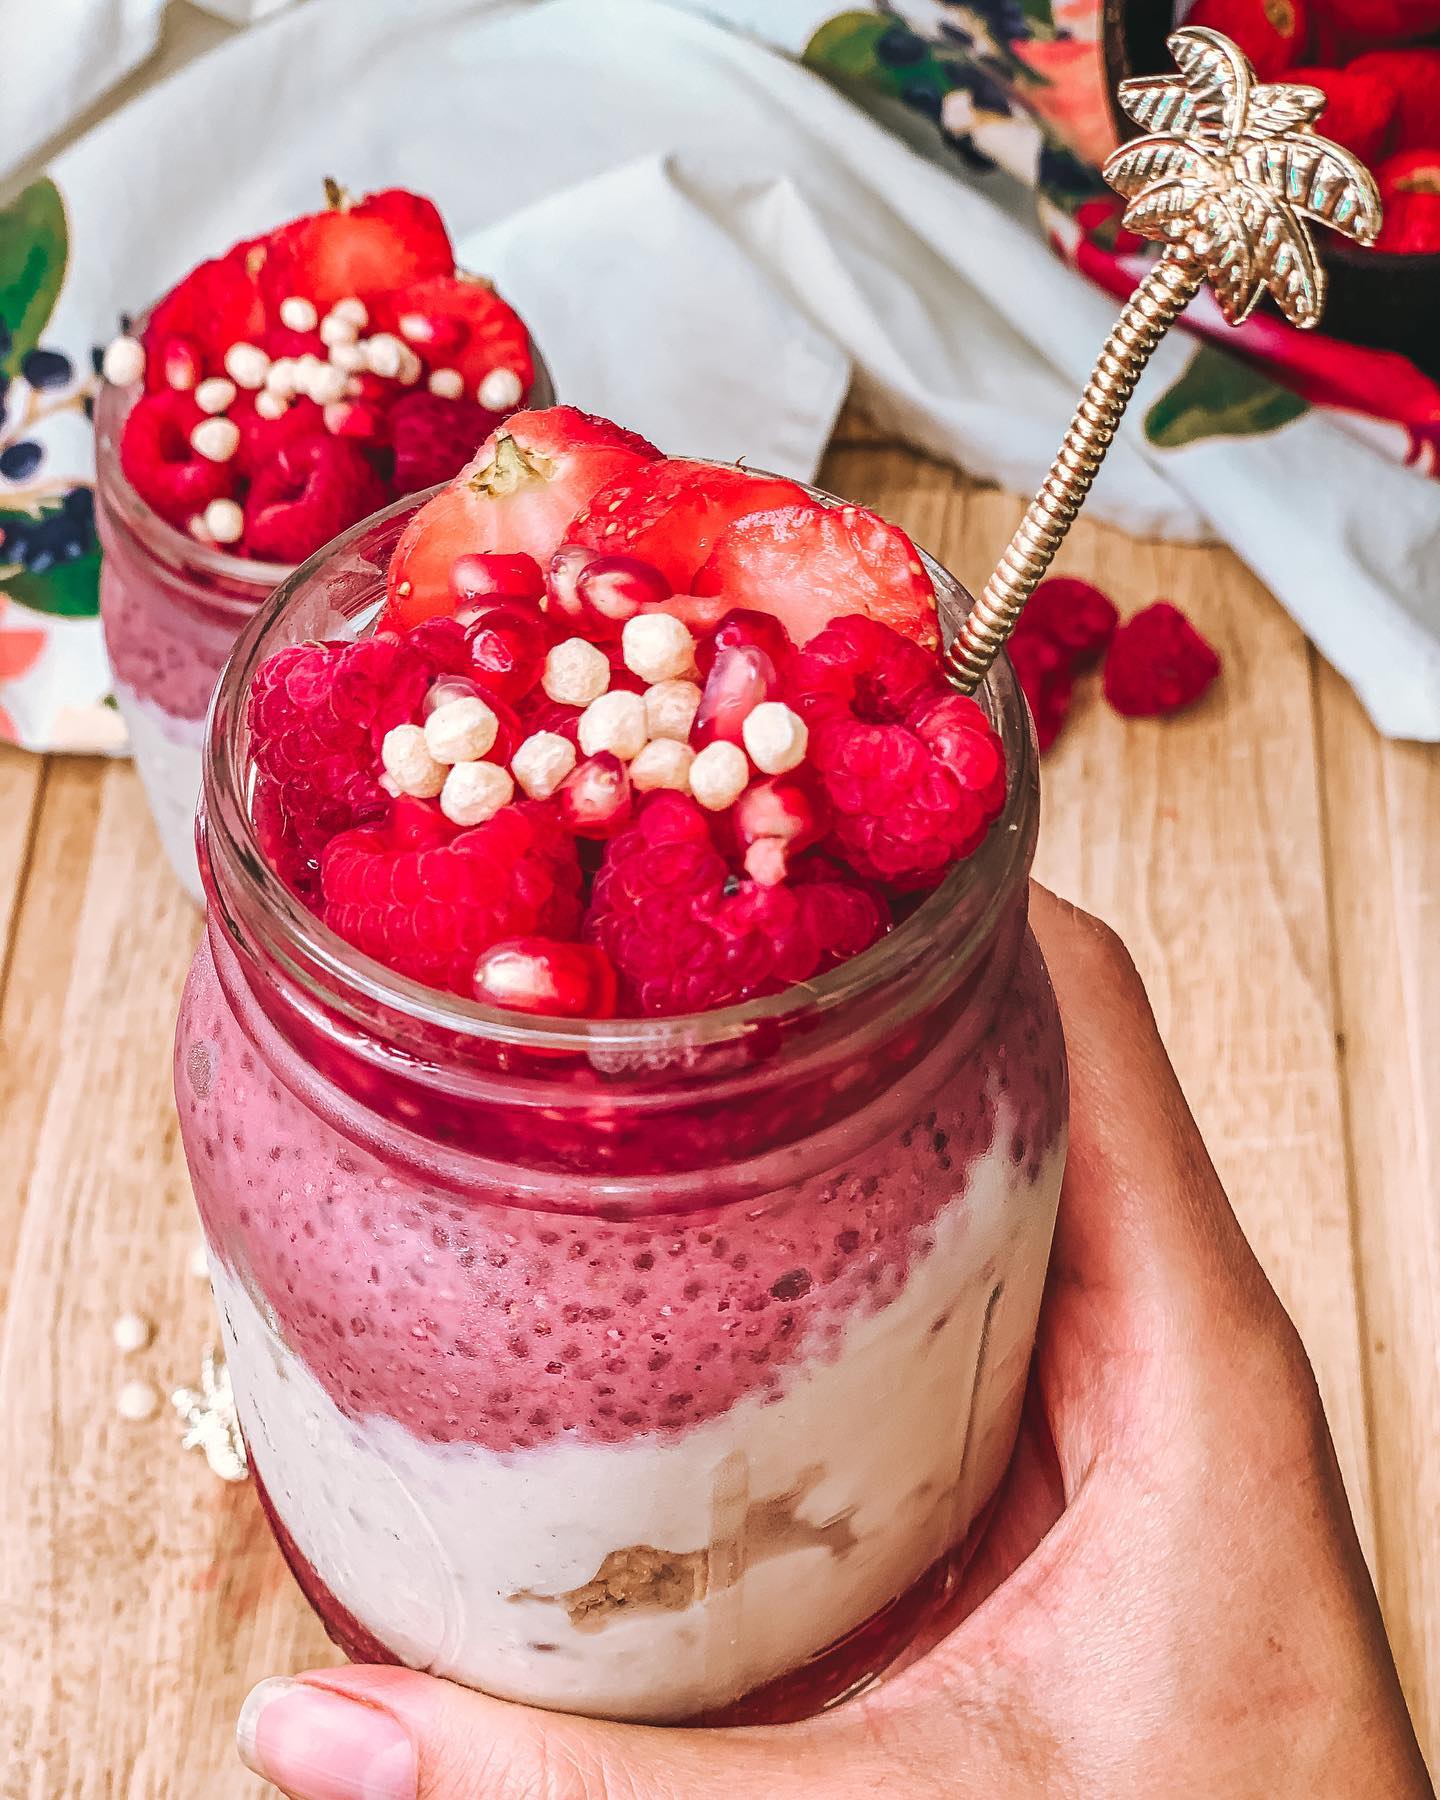 Easy Vegan Parfait with Homemade Pomegranate/raspberry Jam